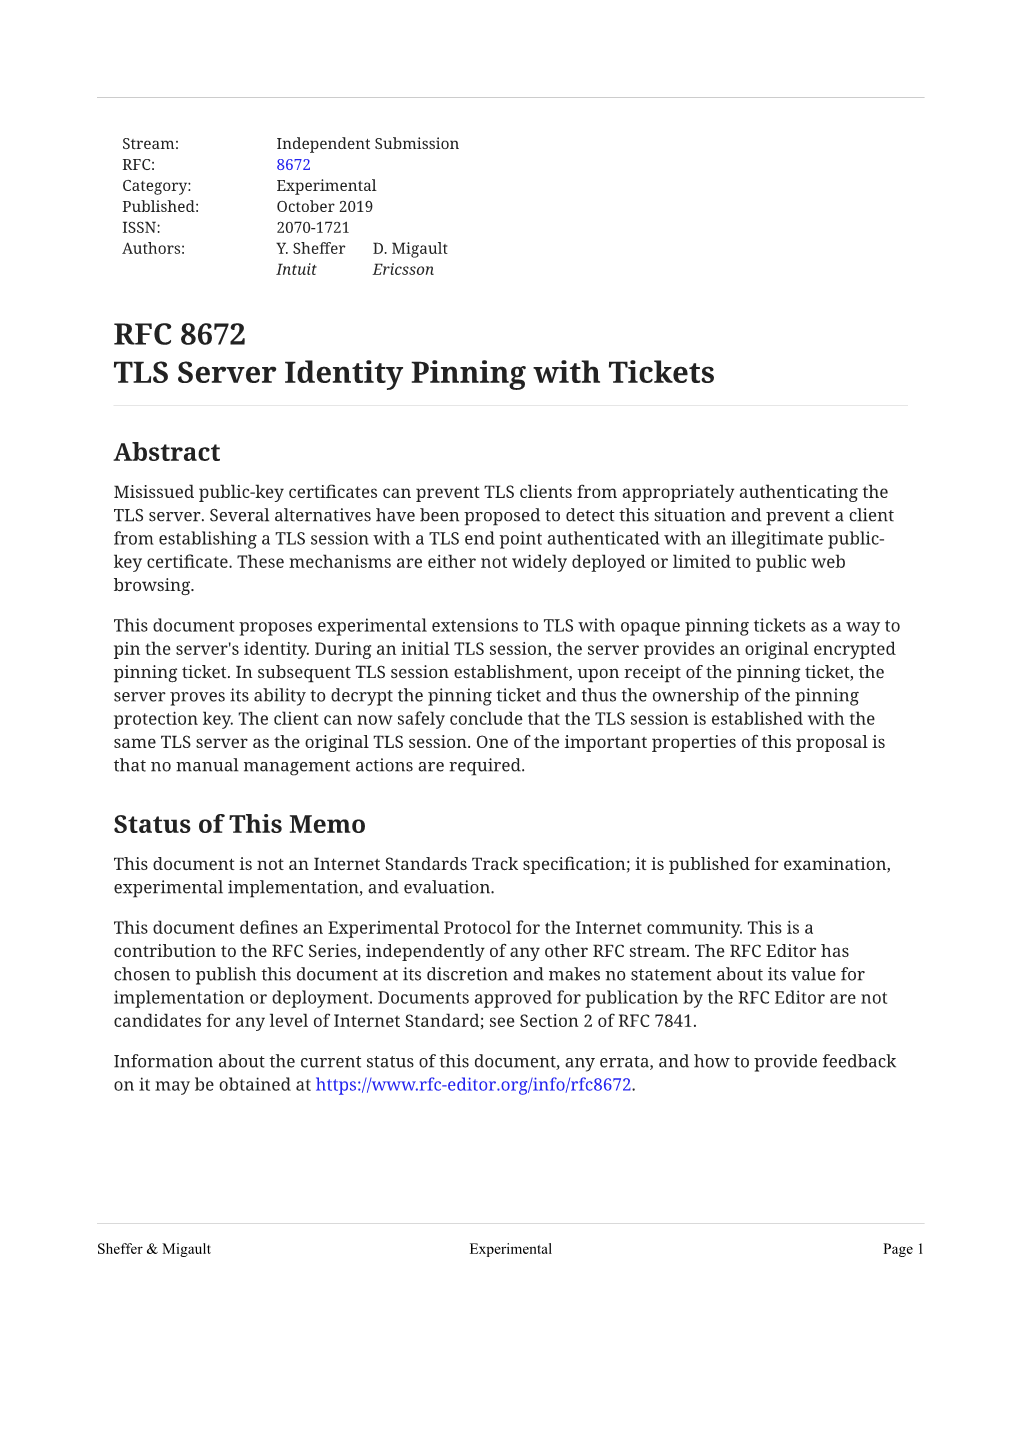 RFC 8672: TLS Server Identity Pinning with Tickets